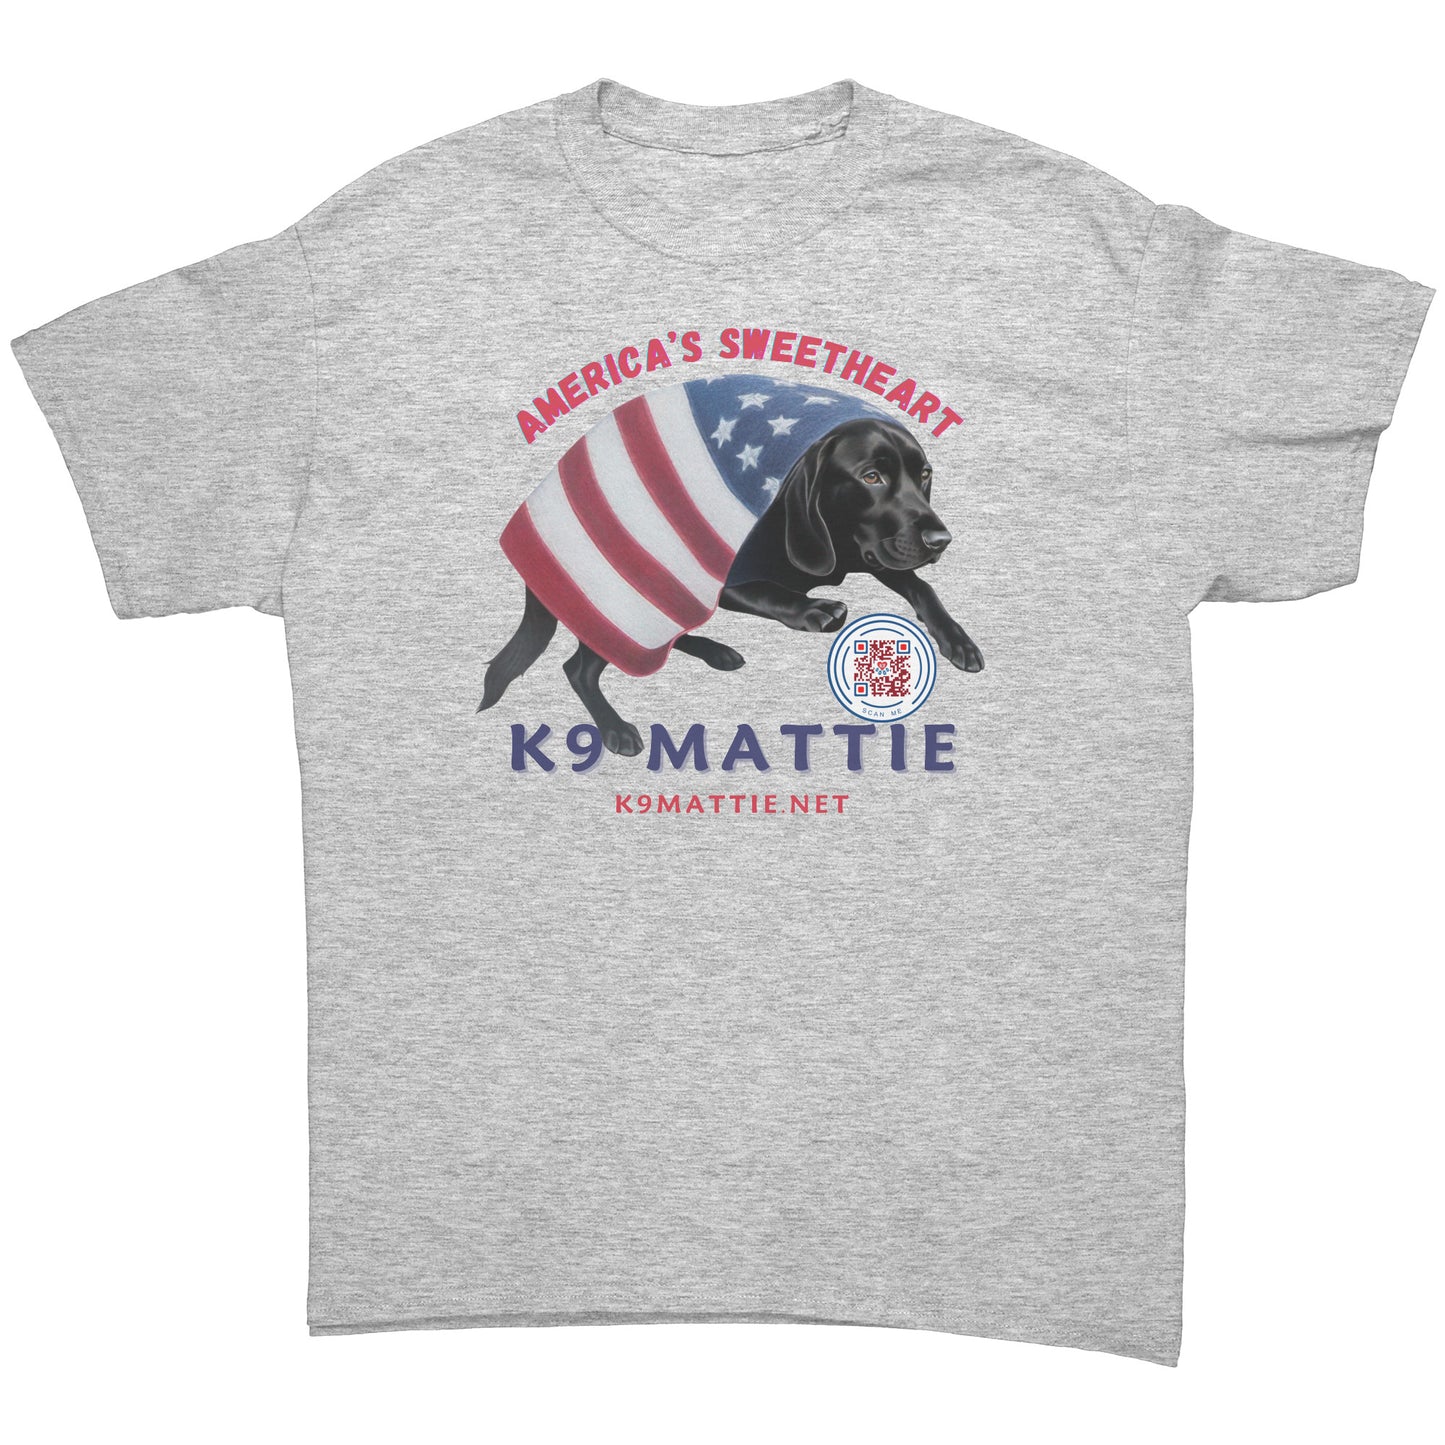 “America’s Sweetheart K9 Mattie” Hanes Unisex T-Shirt